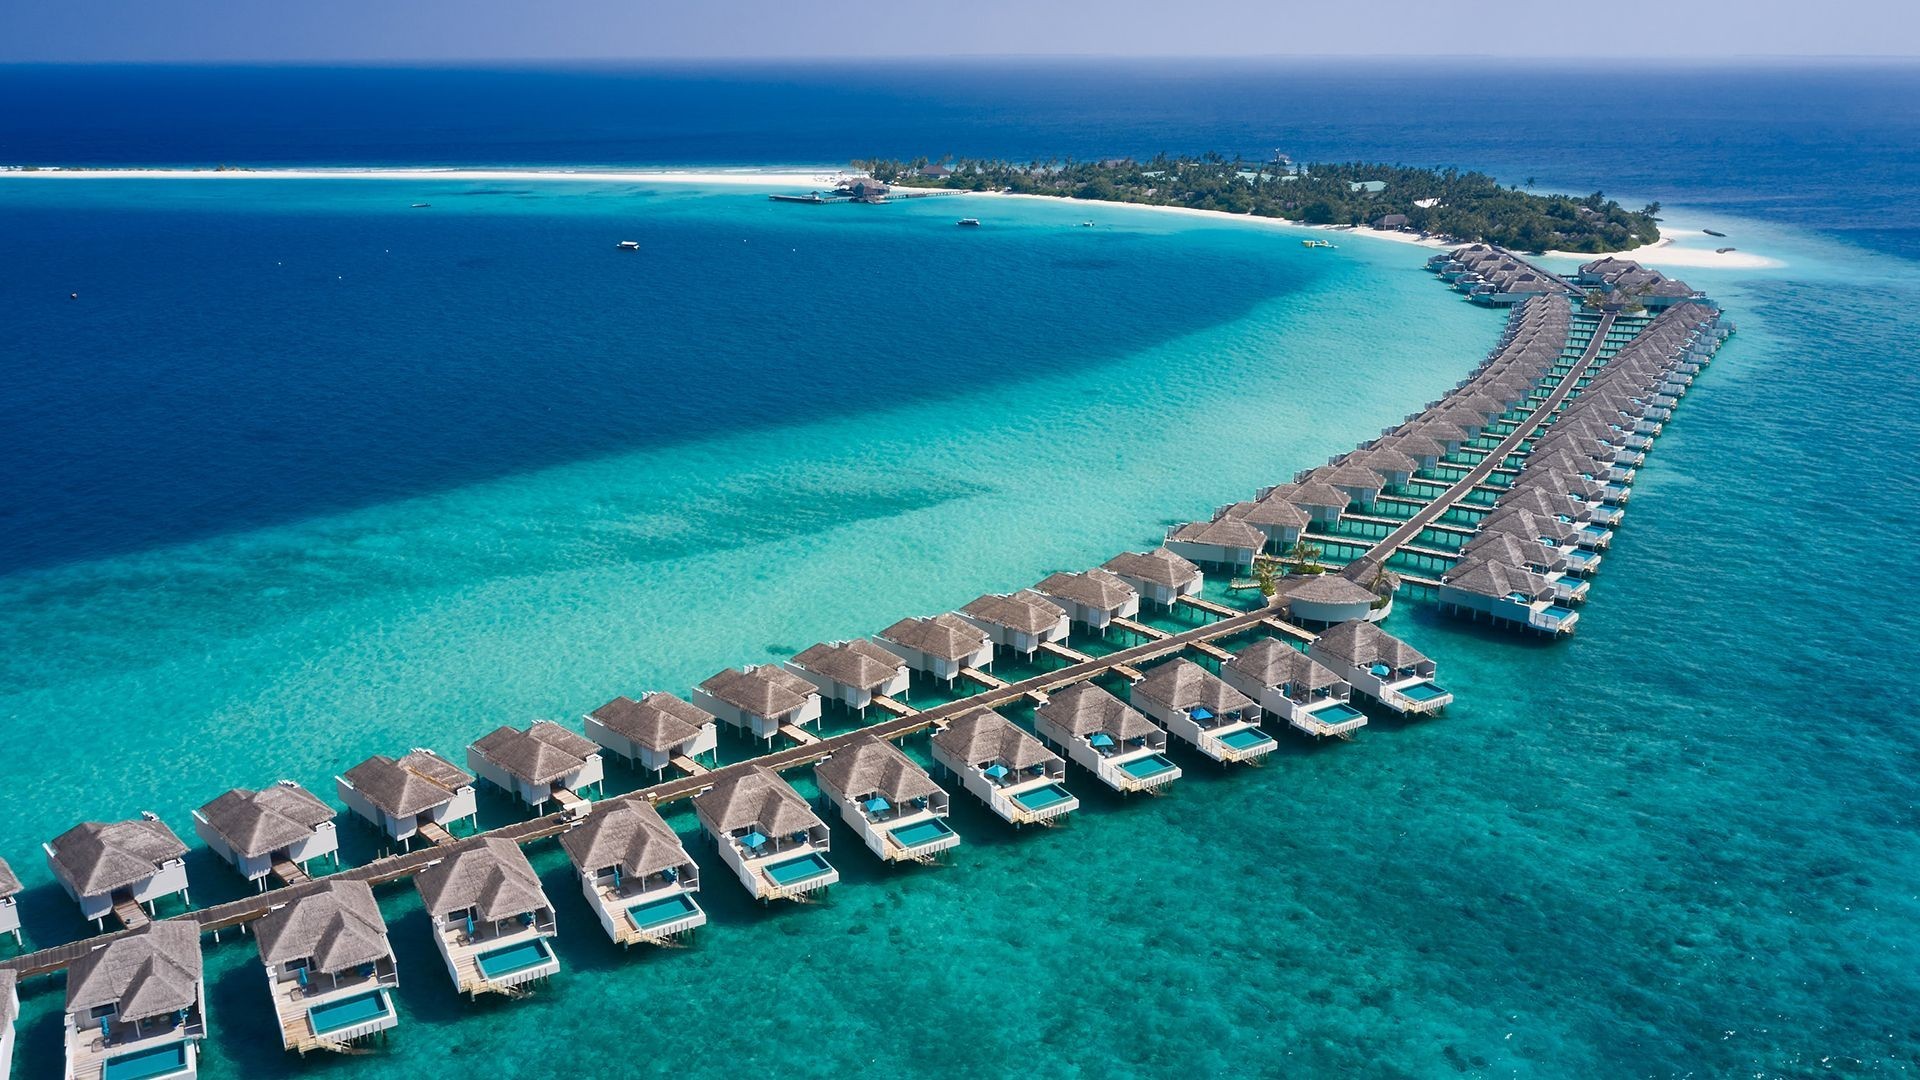 Maldives time now